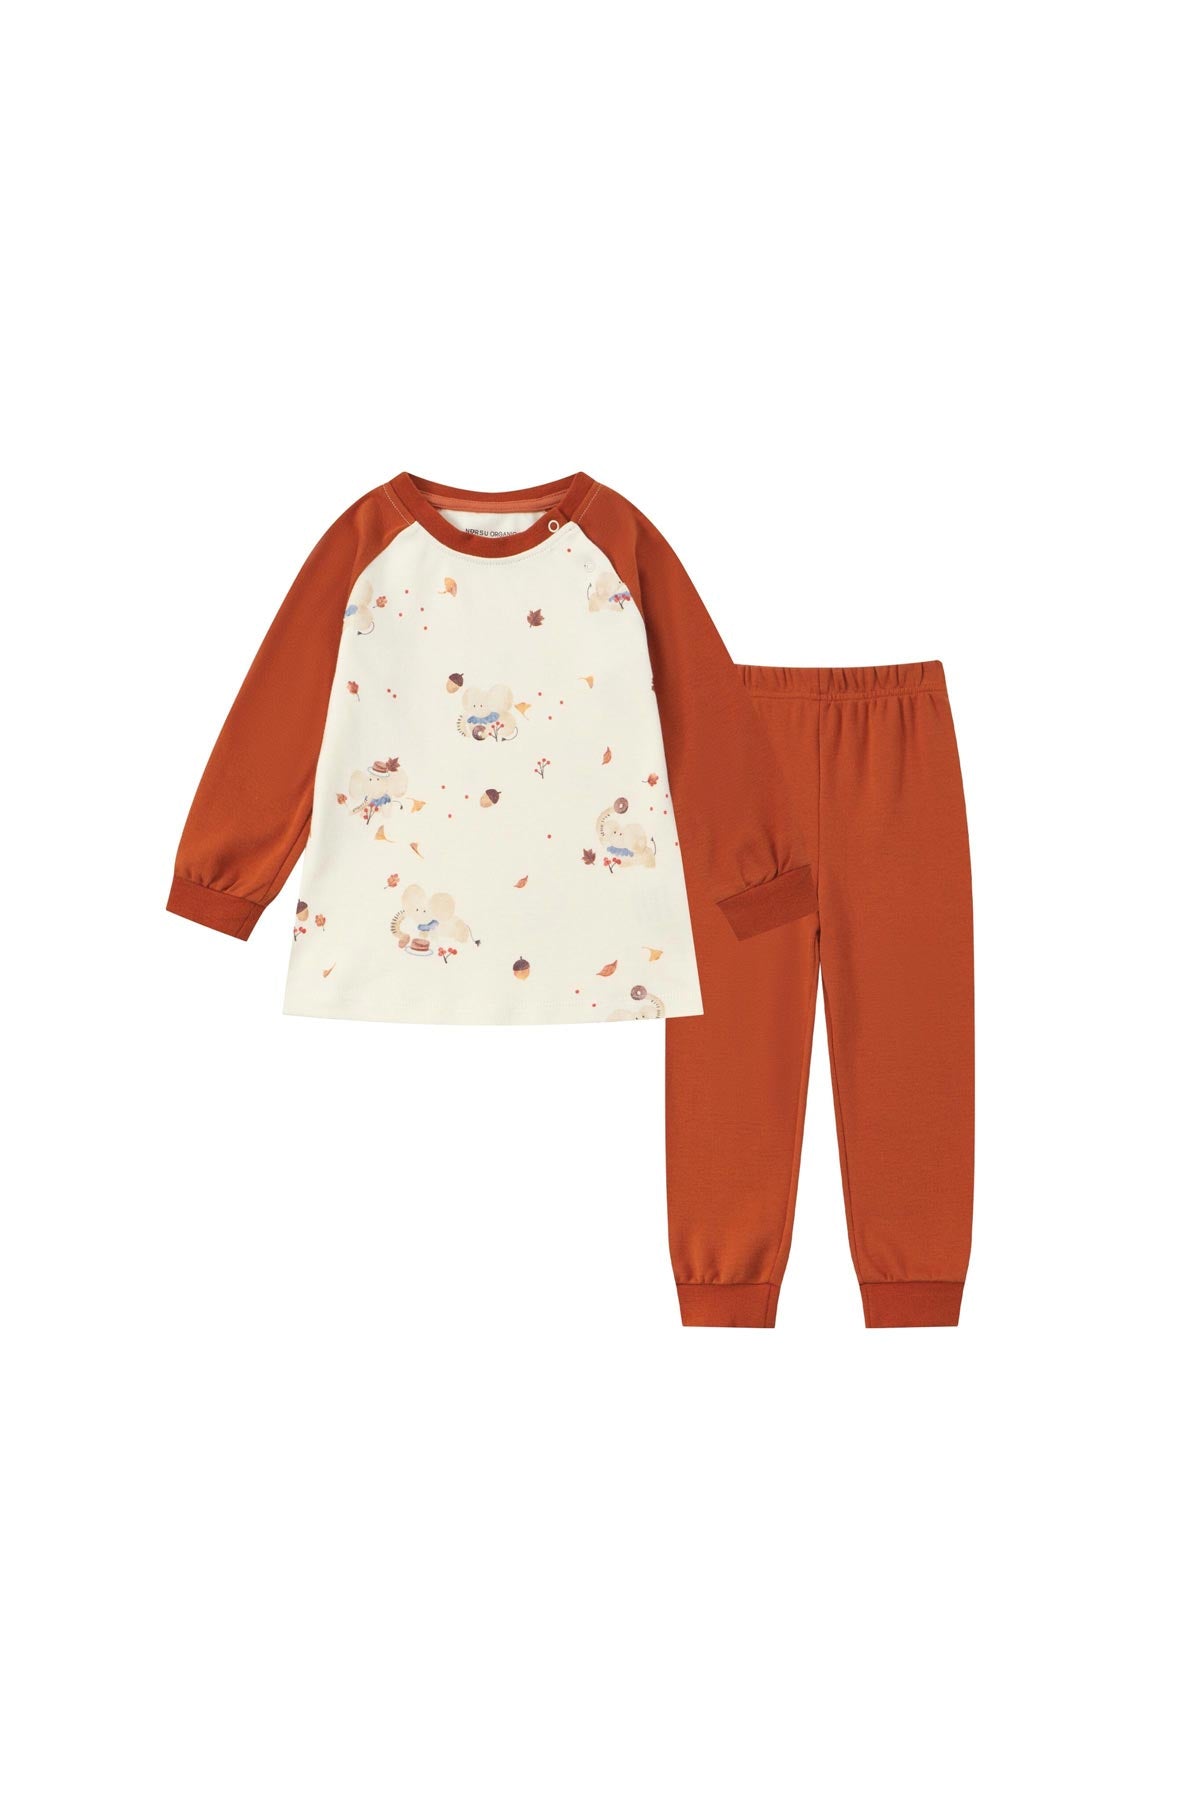 Front of Organic Toddler Pajama Set-Maple leaf